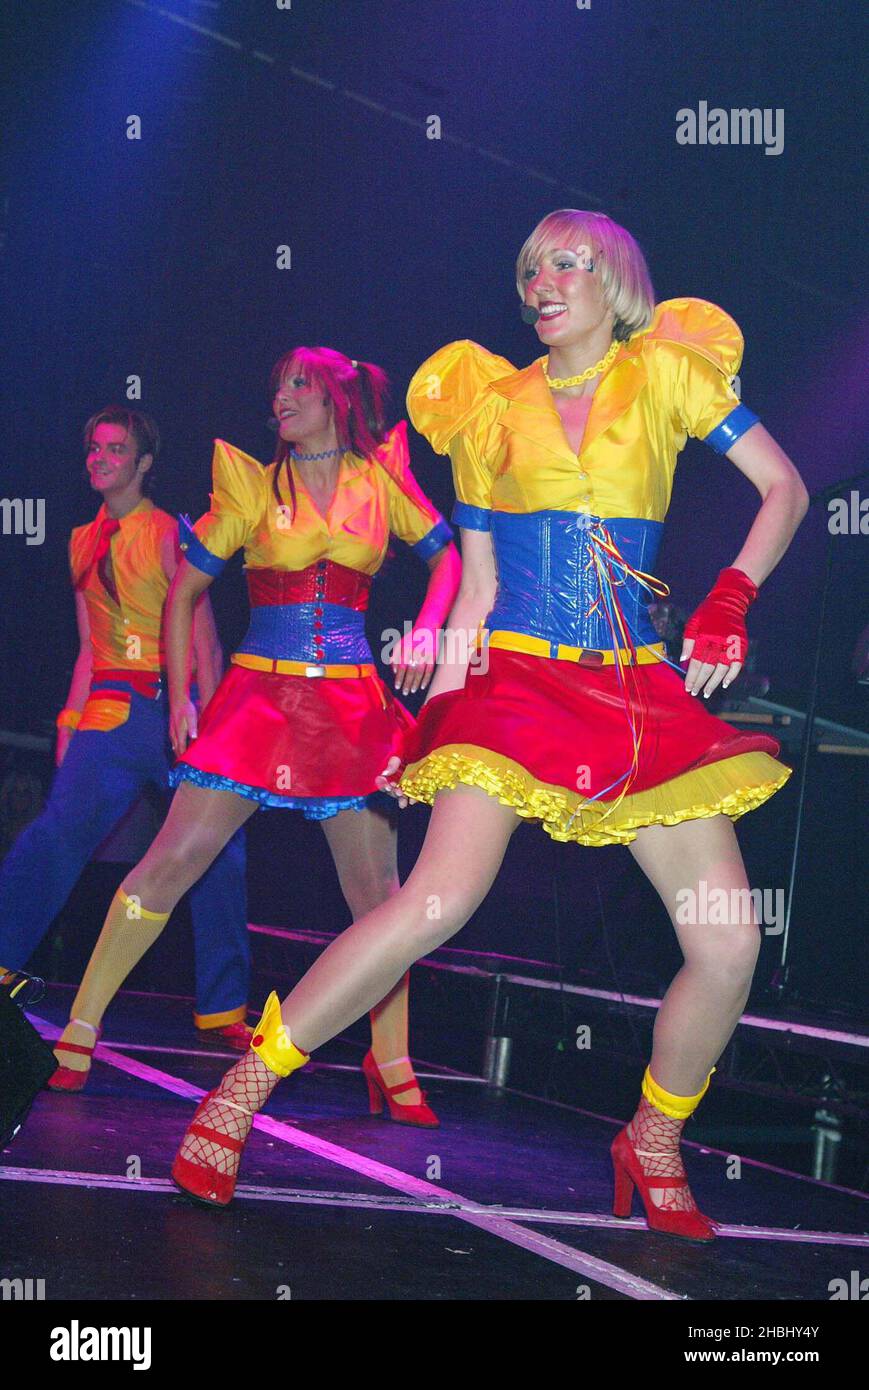 Fast Food Rockers si esibiscono dal vivo sul palco al GAY Astoria London Foto Stock